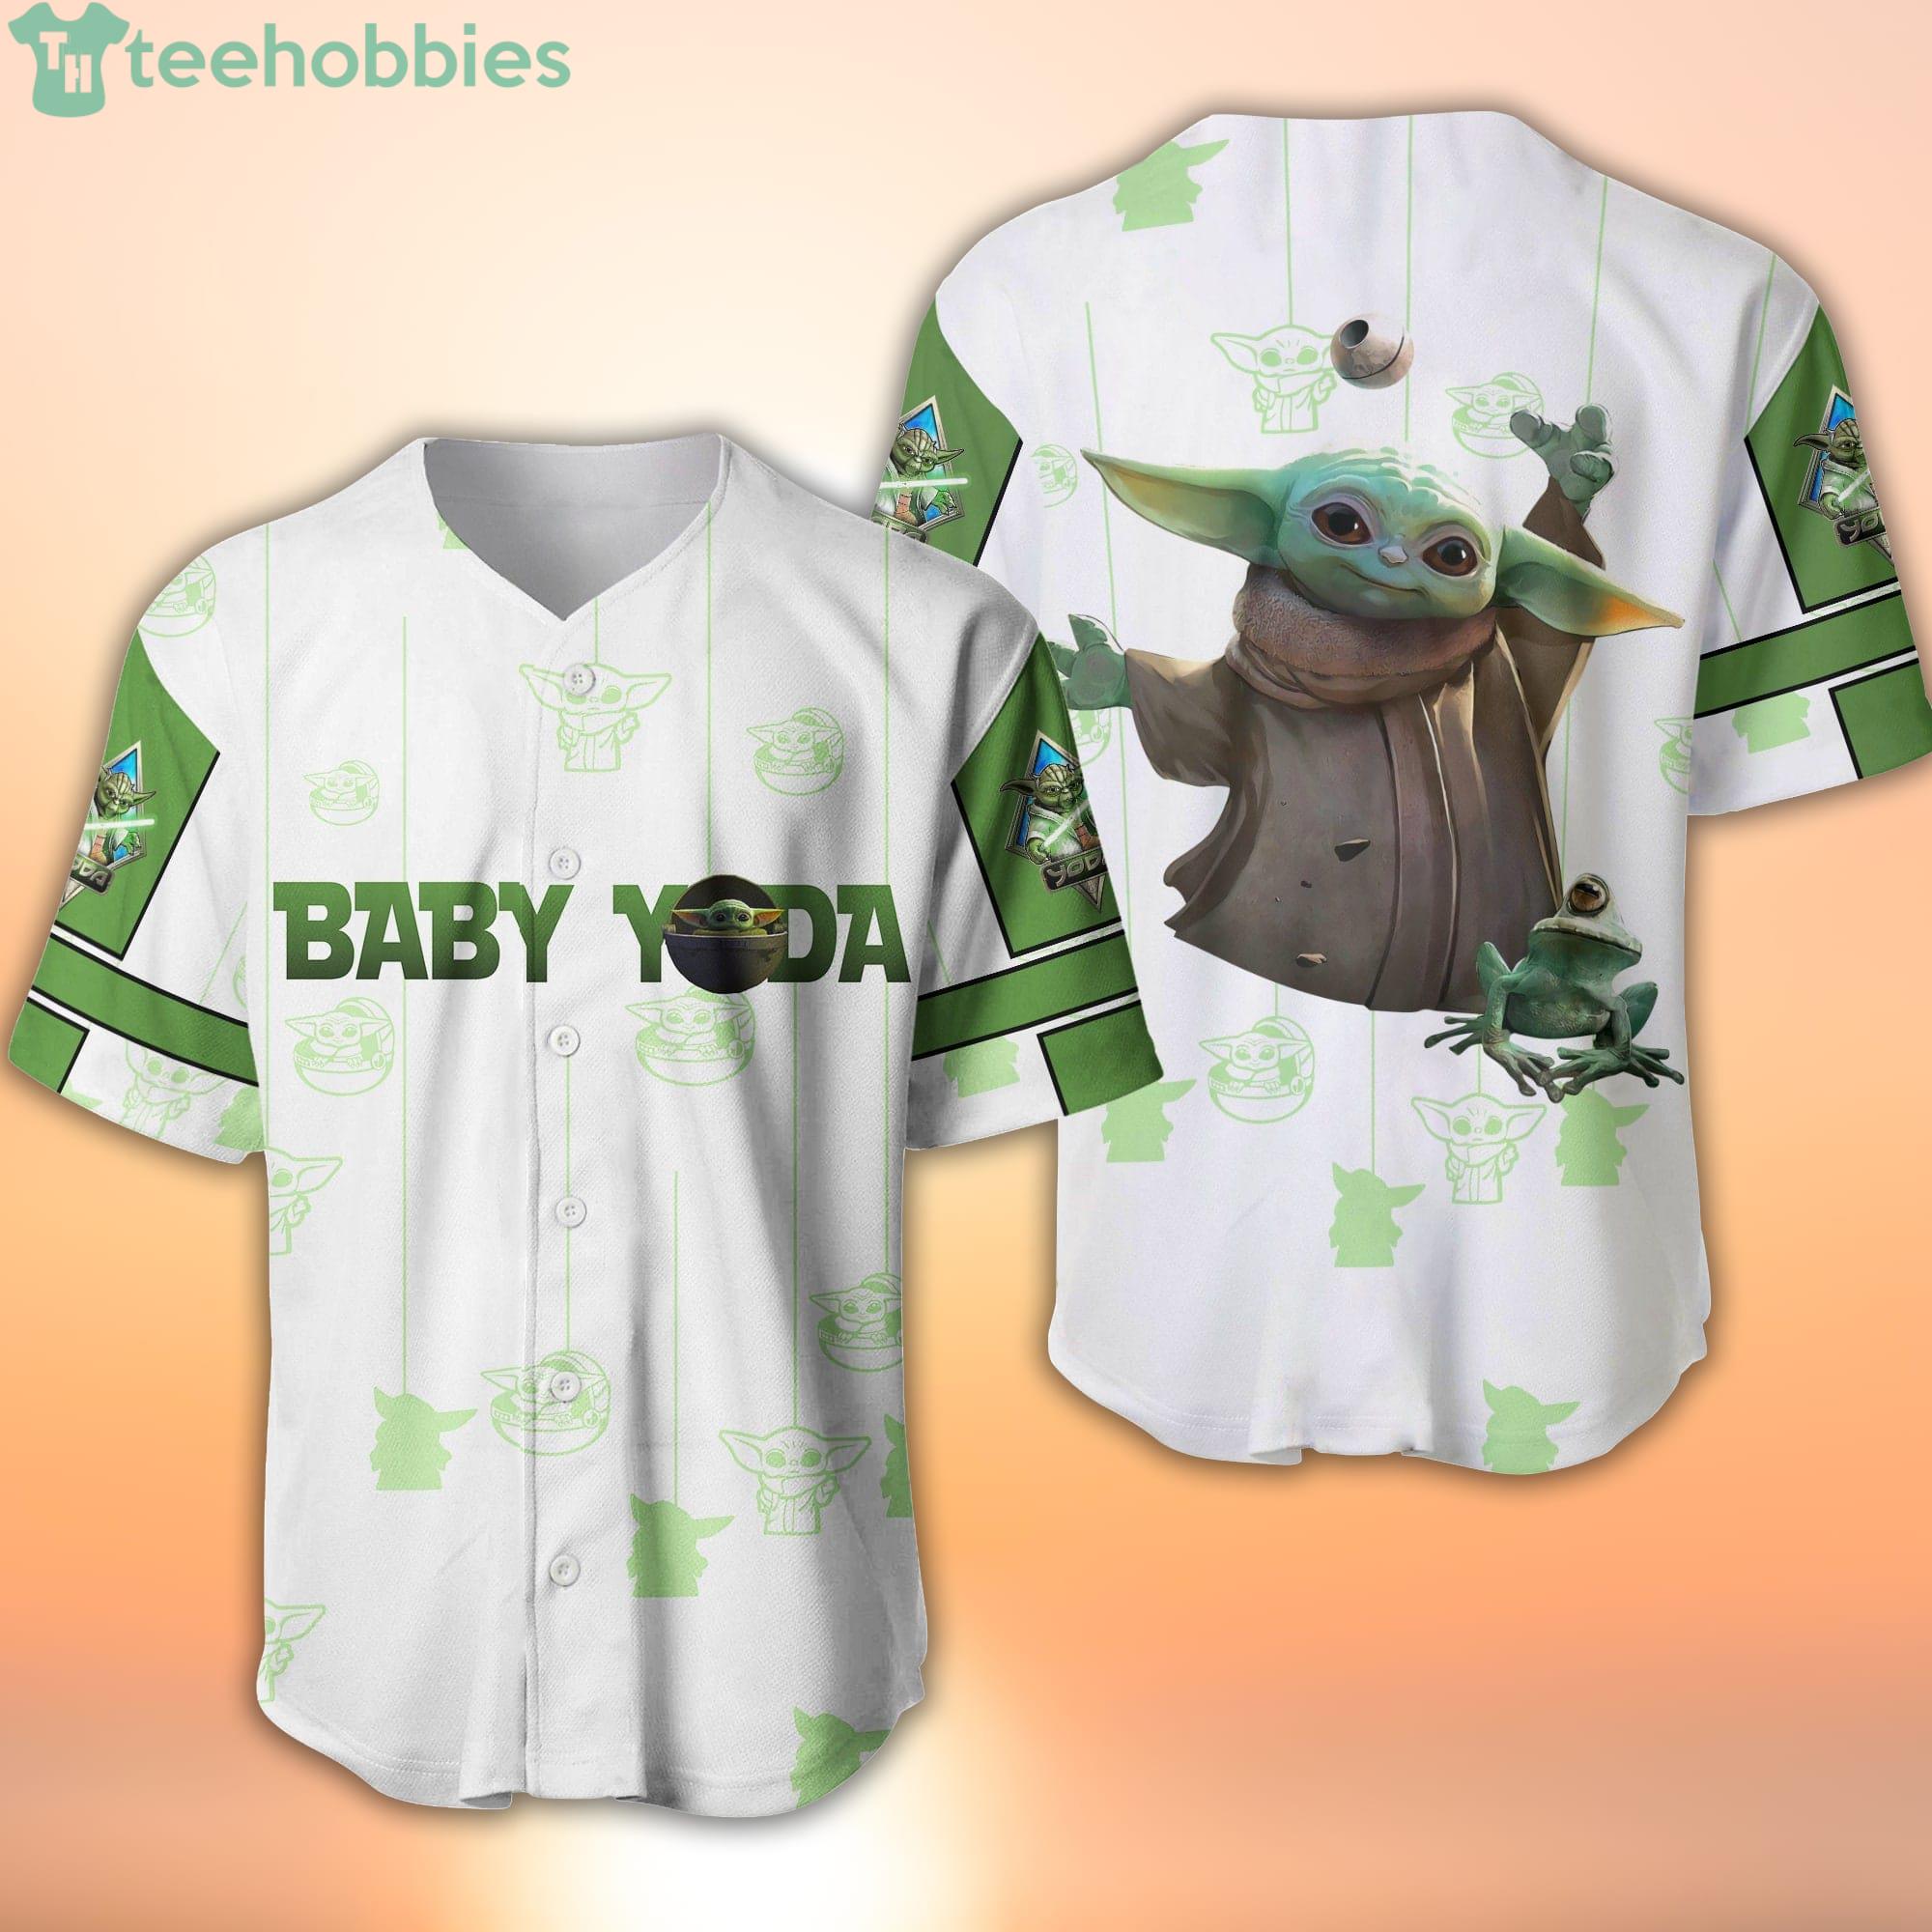 Star Wars Baby Yoda White Green Patterns Disney Cartoon Baseball Jersey Shirt Product Photo 1